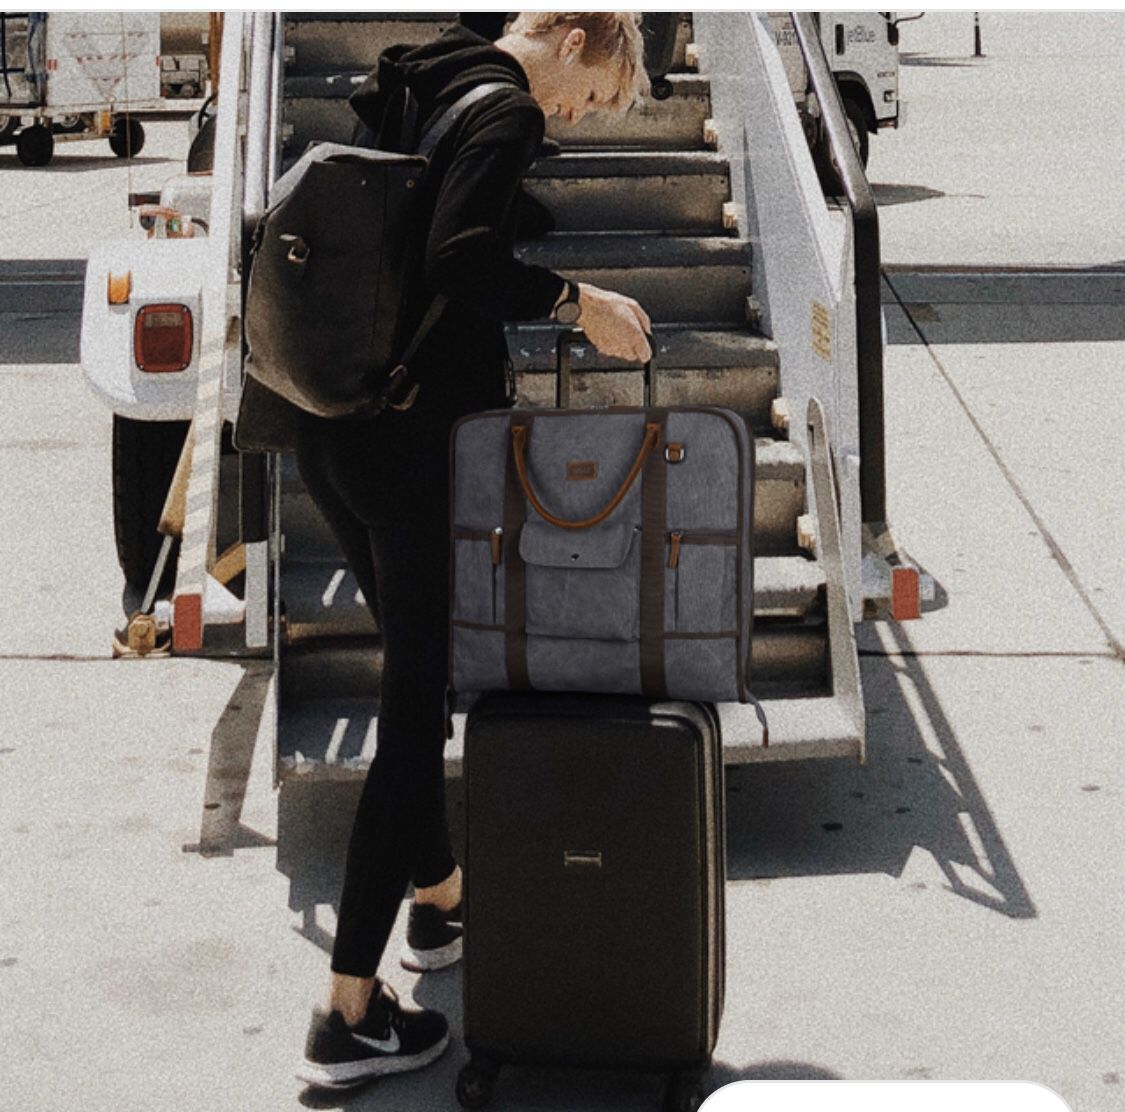 TFSKY Casual Suit Bag Carry On Garment Bag Flight Bag Canvas Suit Shoulder Bag for Travel & Business Trips With Shoulder Strap (Style3, Black)